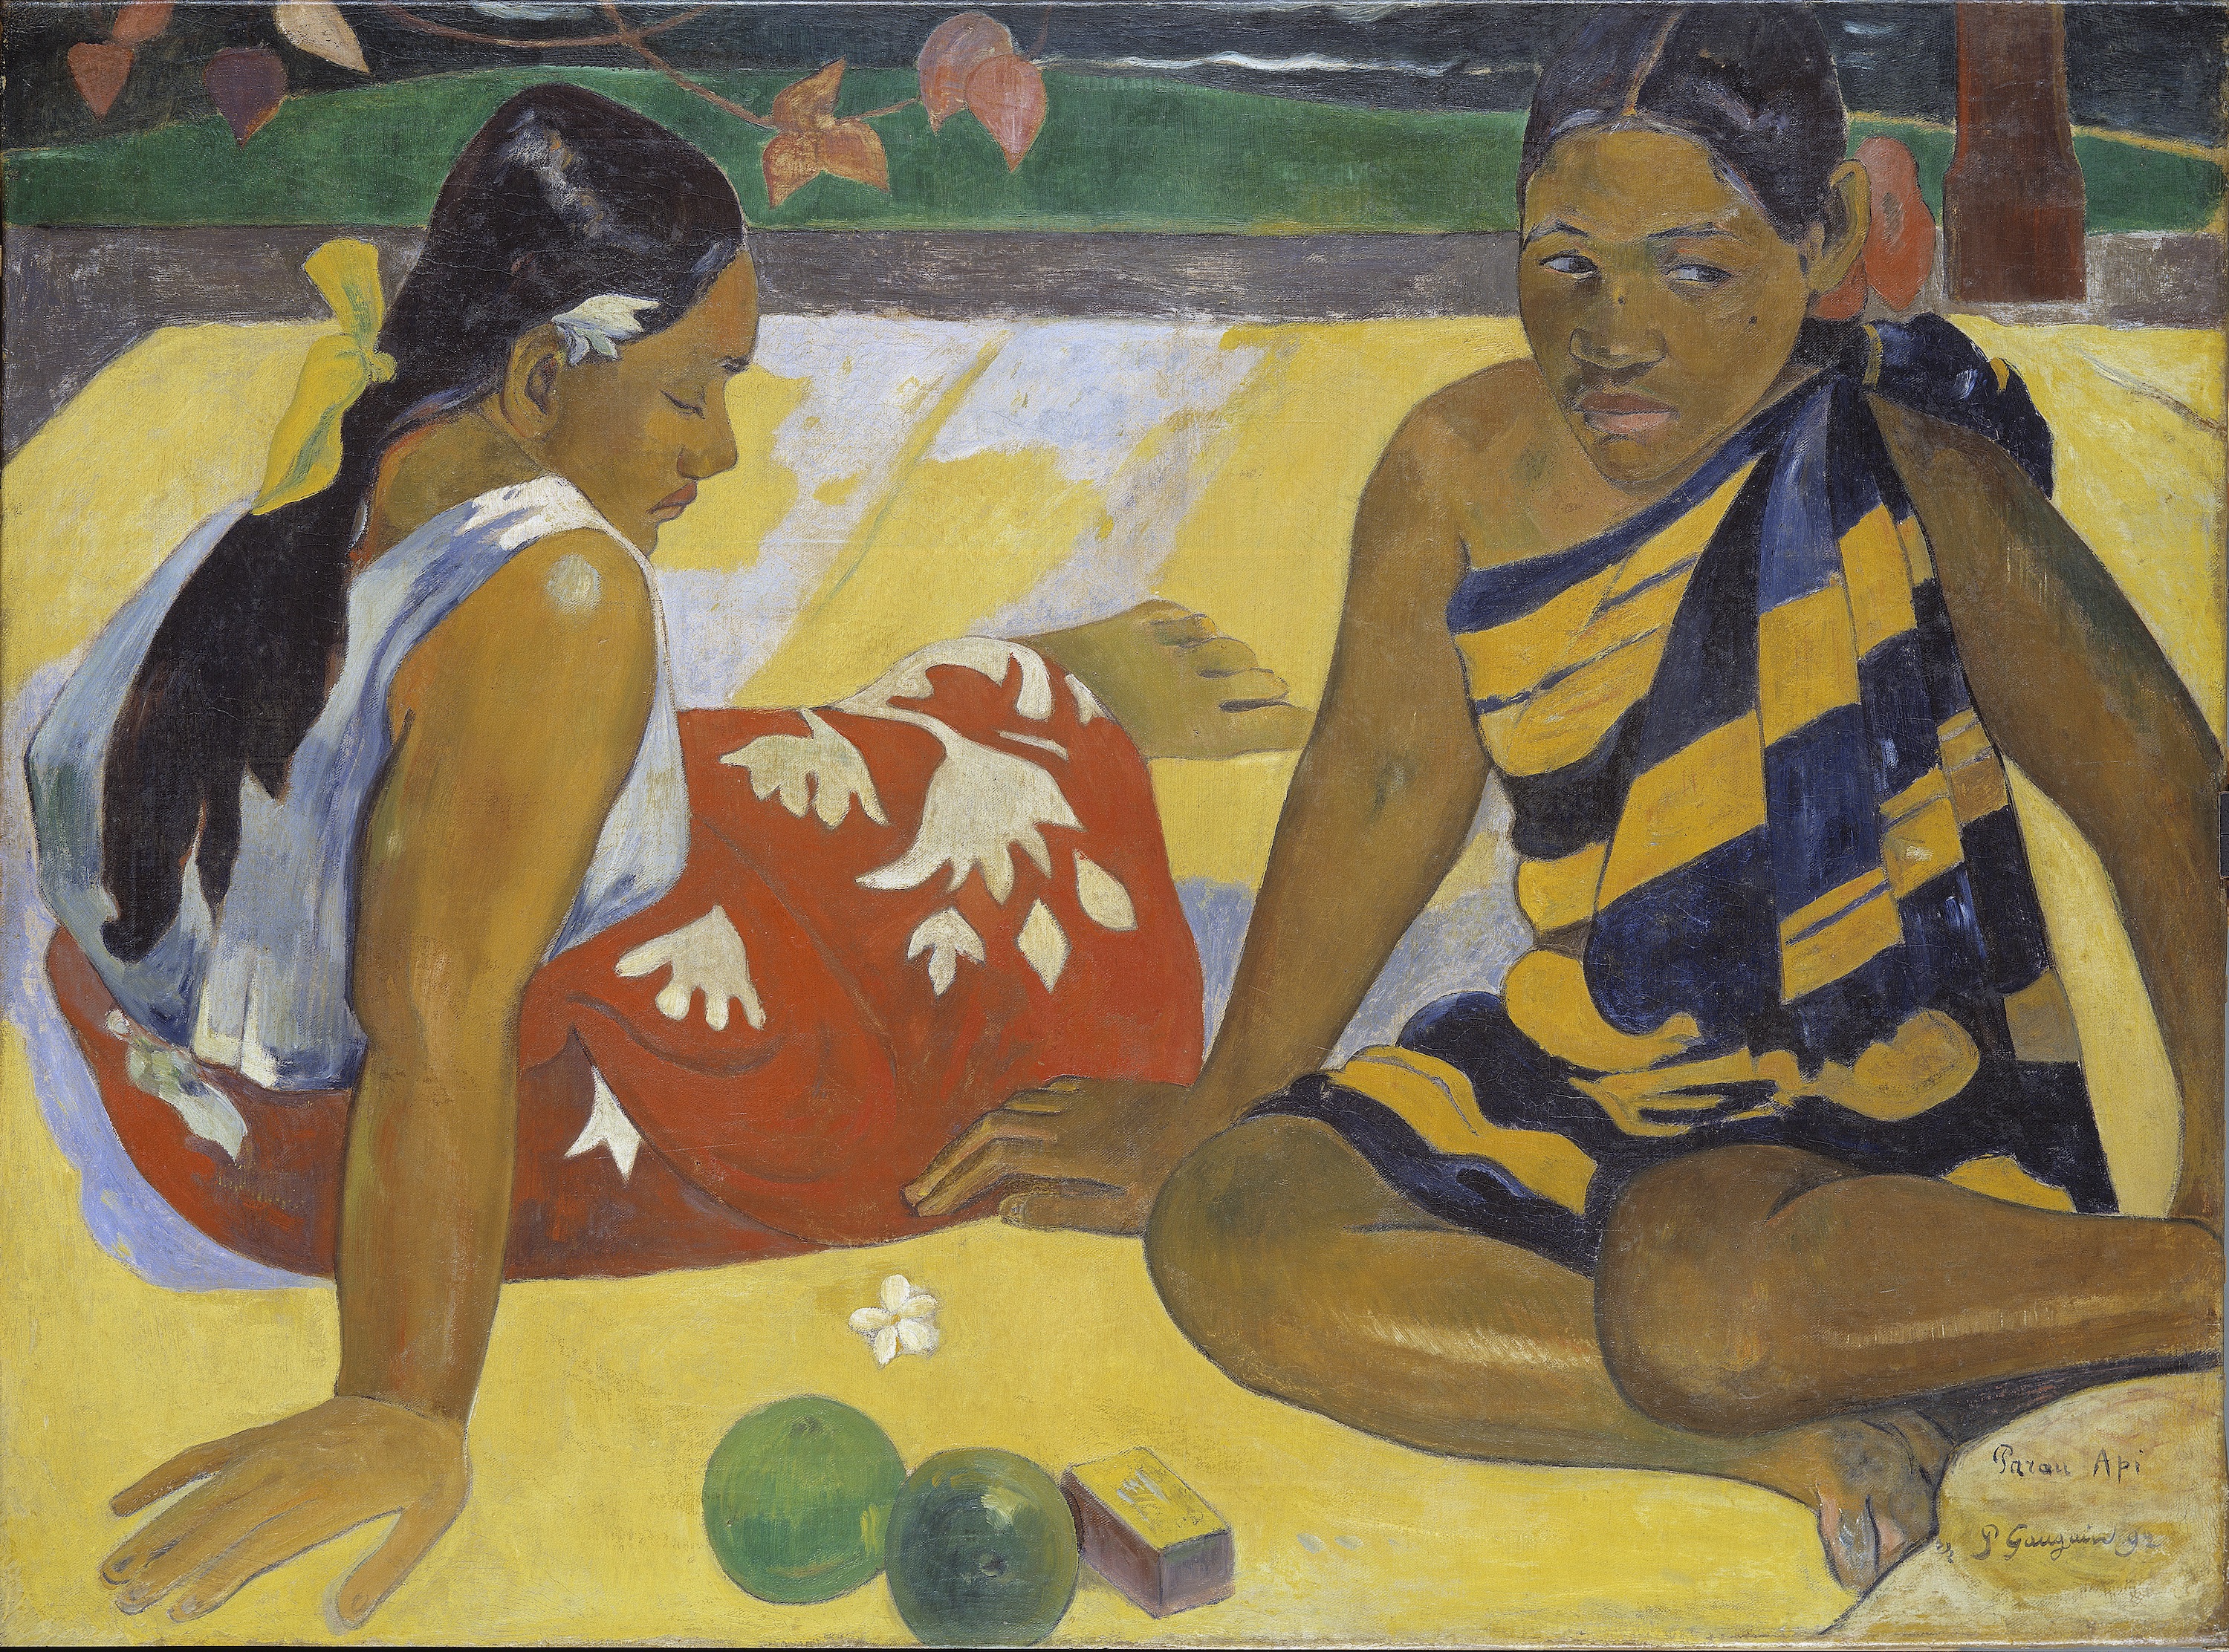 Parau Api. Che notizia! by Paul Gauguin - 1892 - 92 x 67 cm 